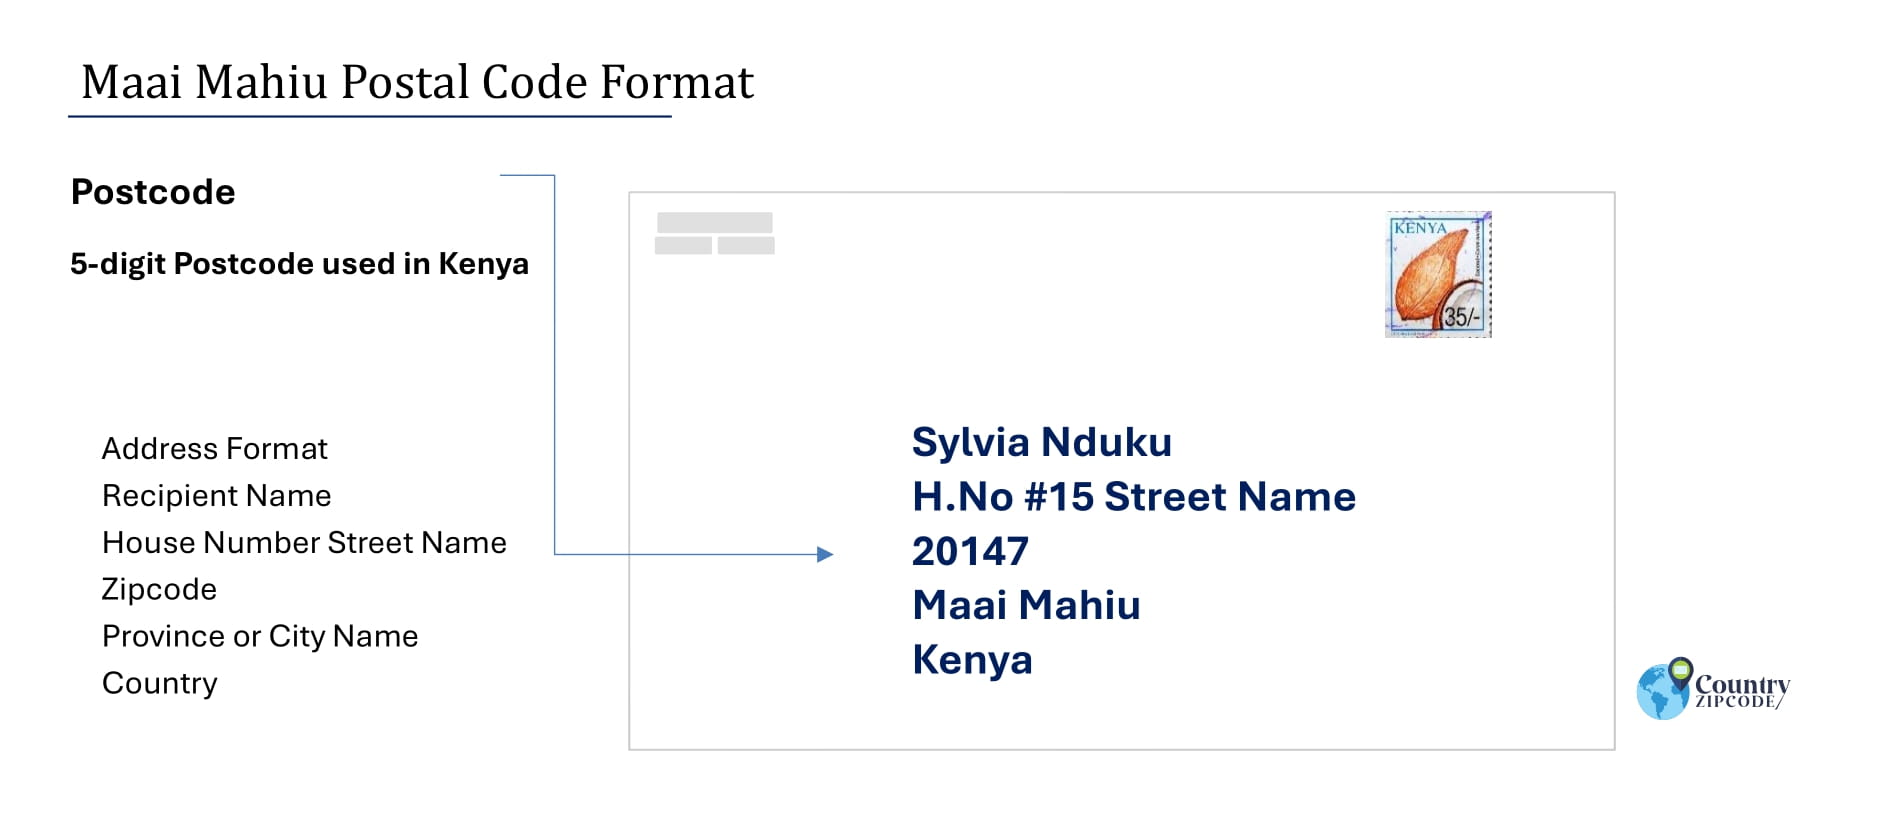 Example of Maai Mahiu Address and postal code format